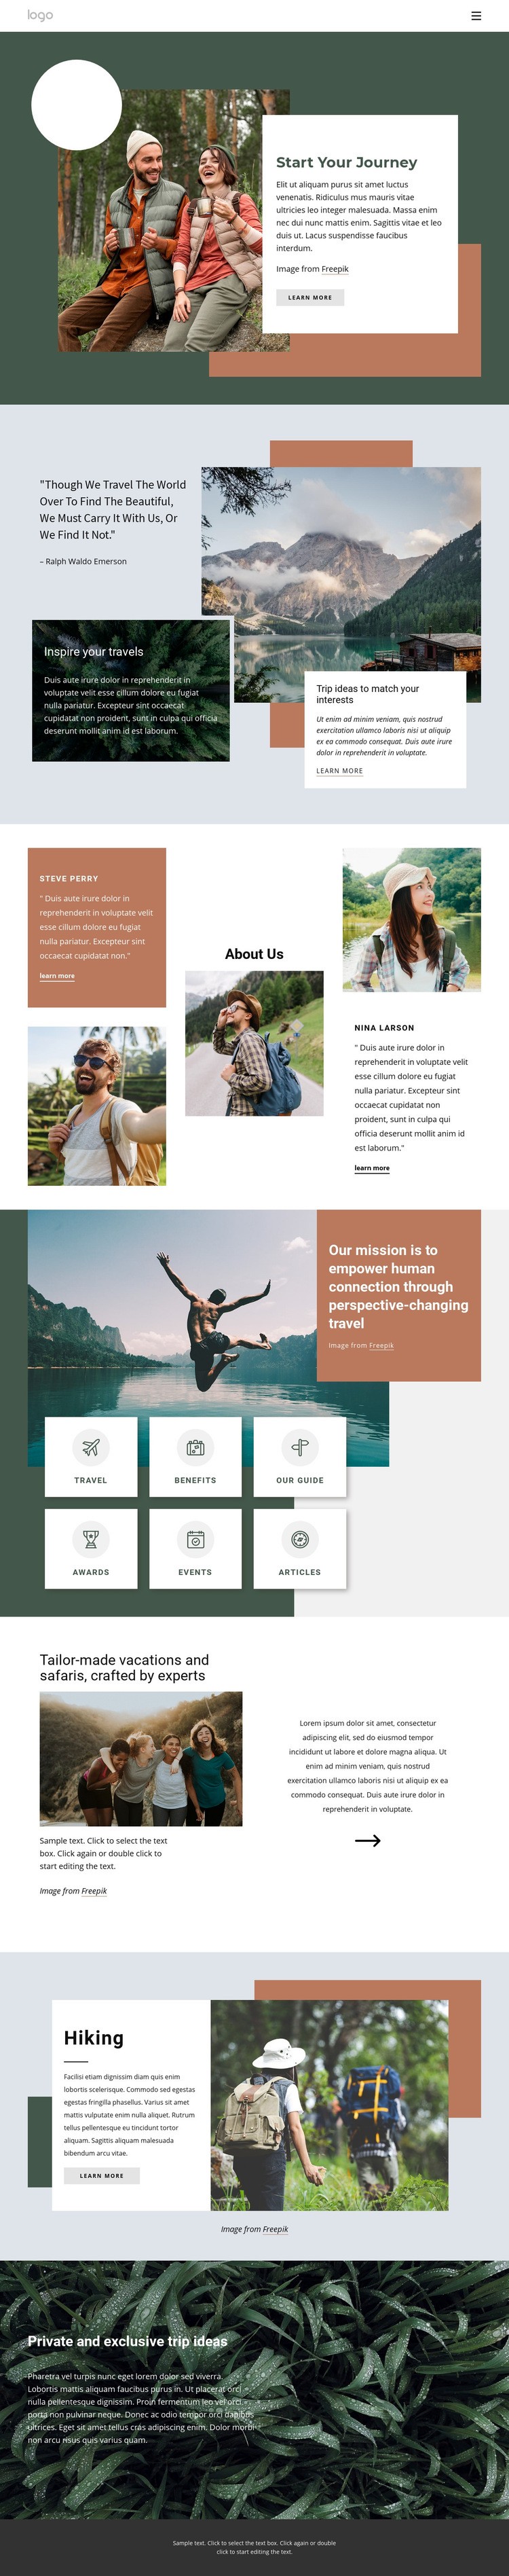 Adventure travel company Homepage Design